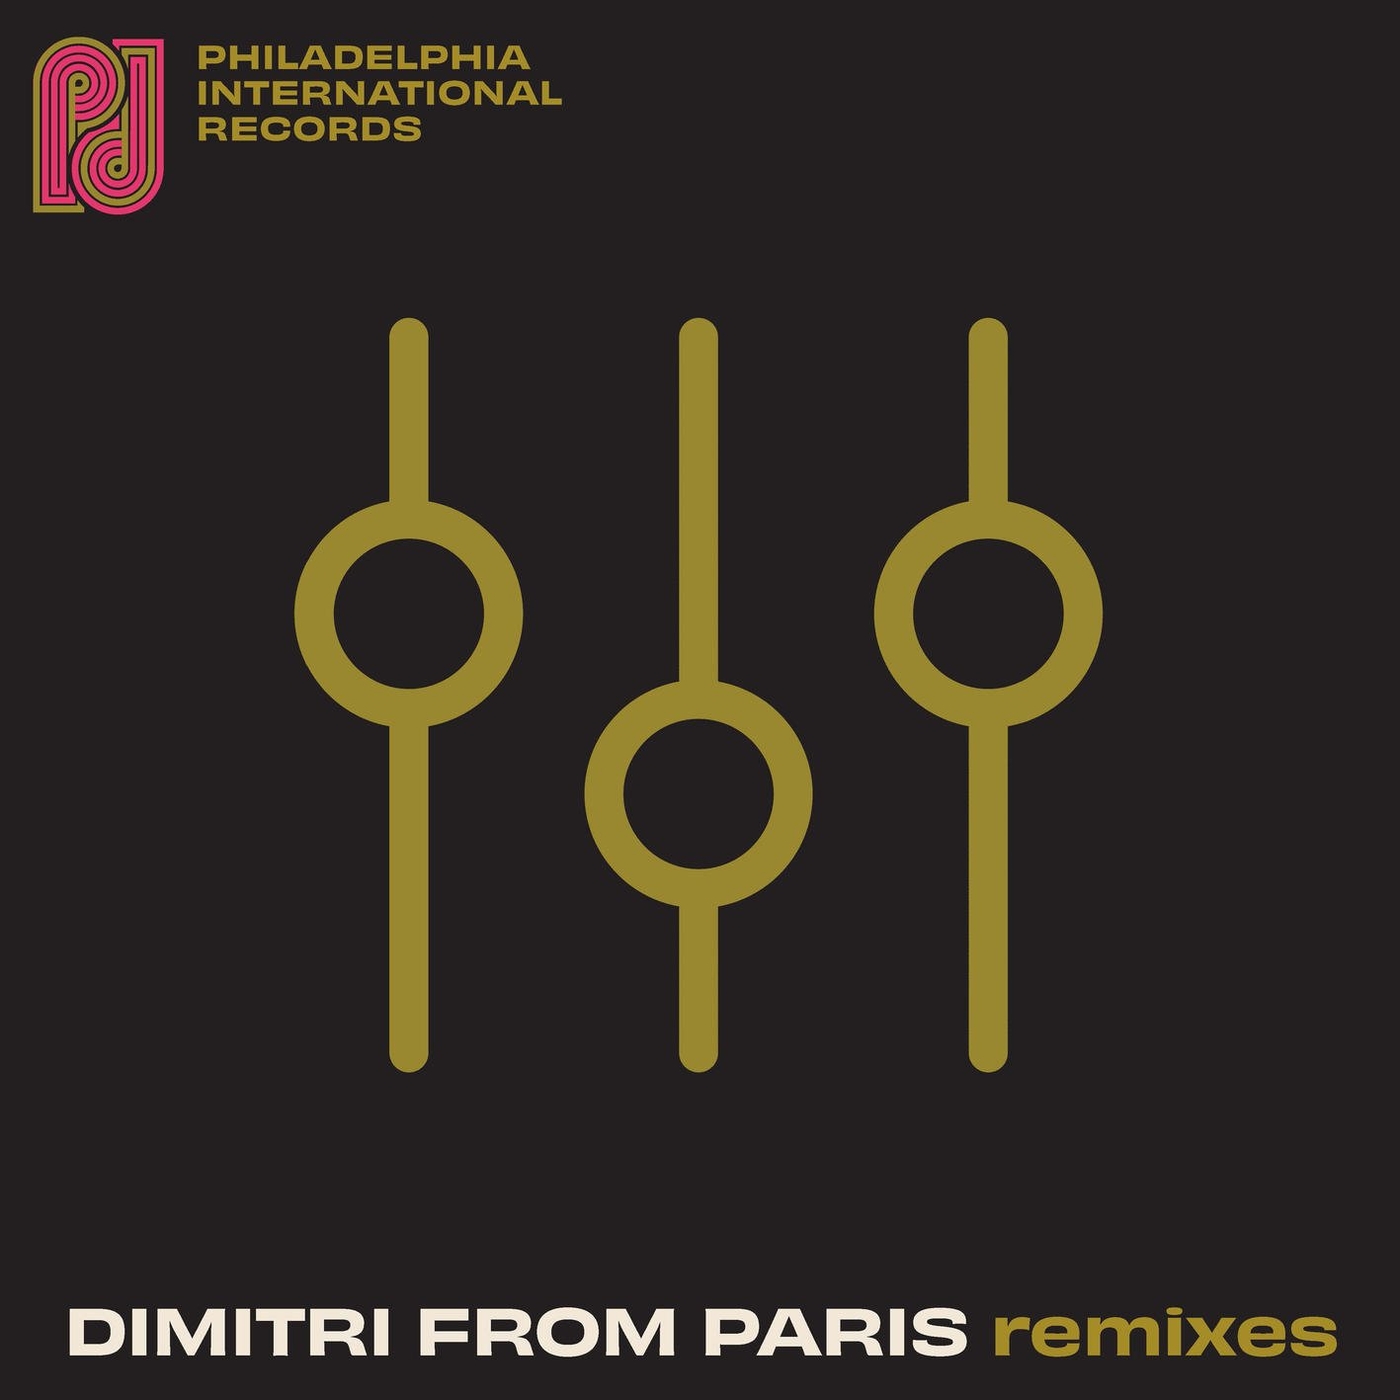 Harold Melvin & The Blue Notes & Teddy Pendergrass – Philadelphia International Records: Dimitri From Paris Remixes